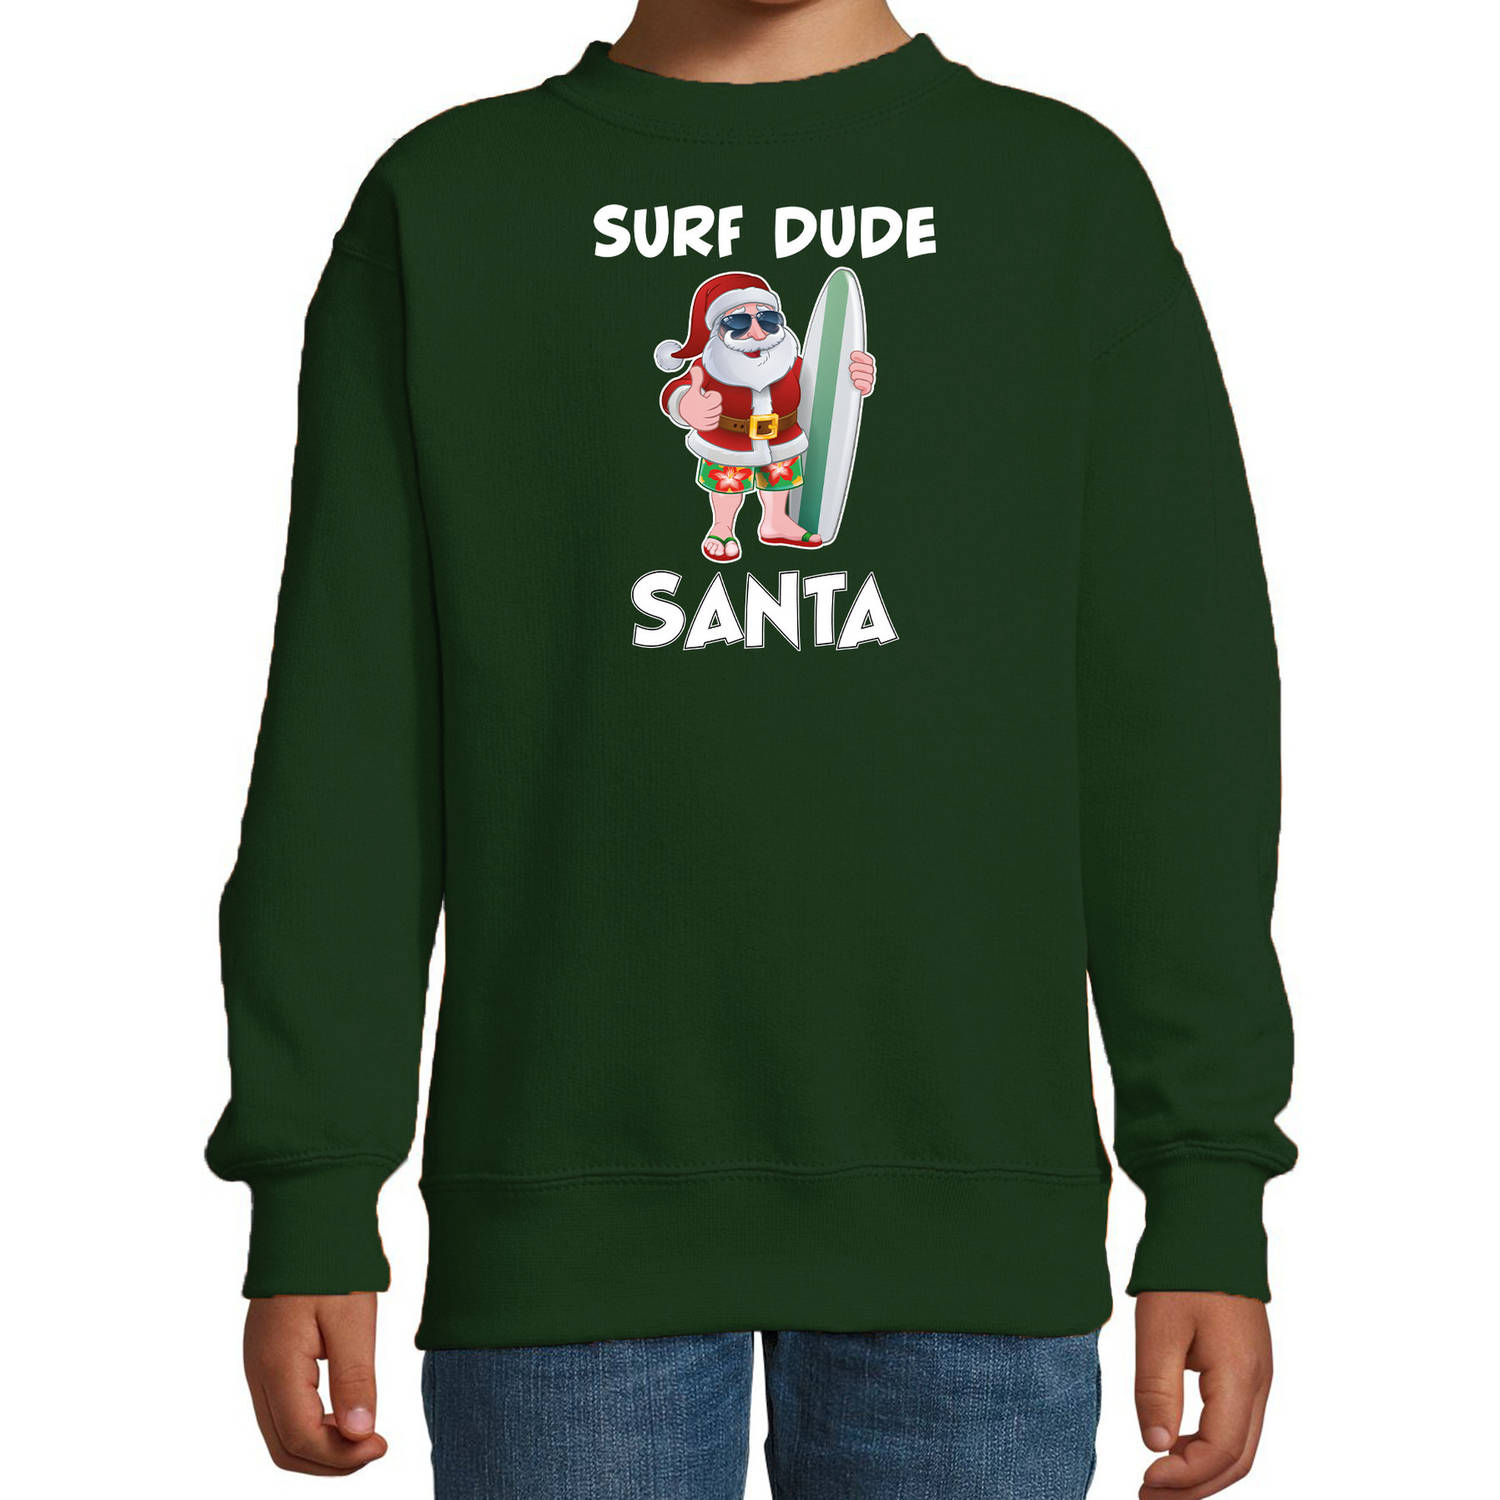 Groene Kersttrui / Kerstkleding surf dude Santa voor kinderen 12-13 jaar (152/164) - kerst truien kind